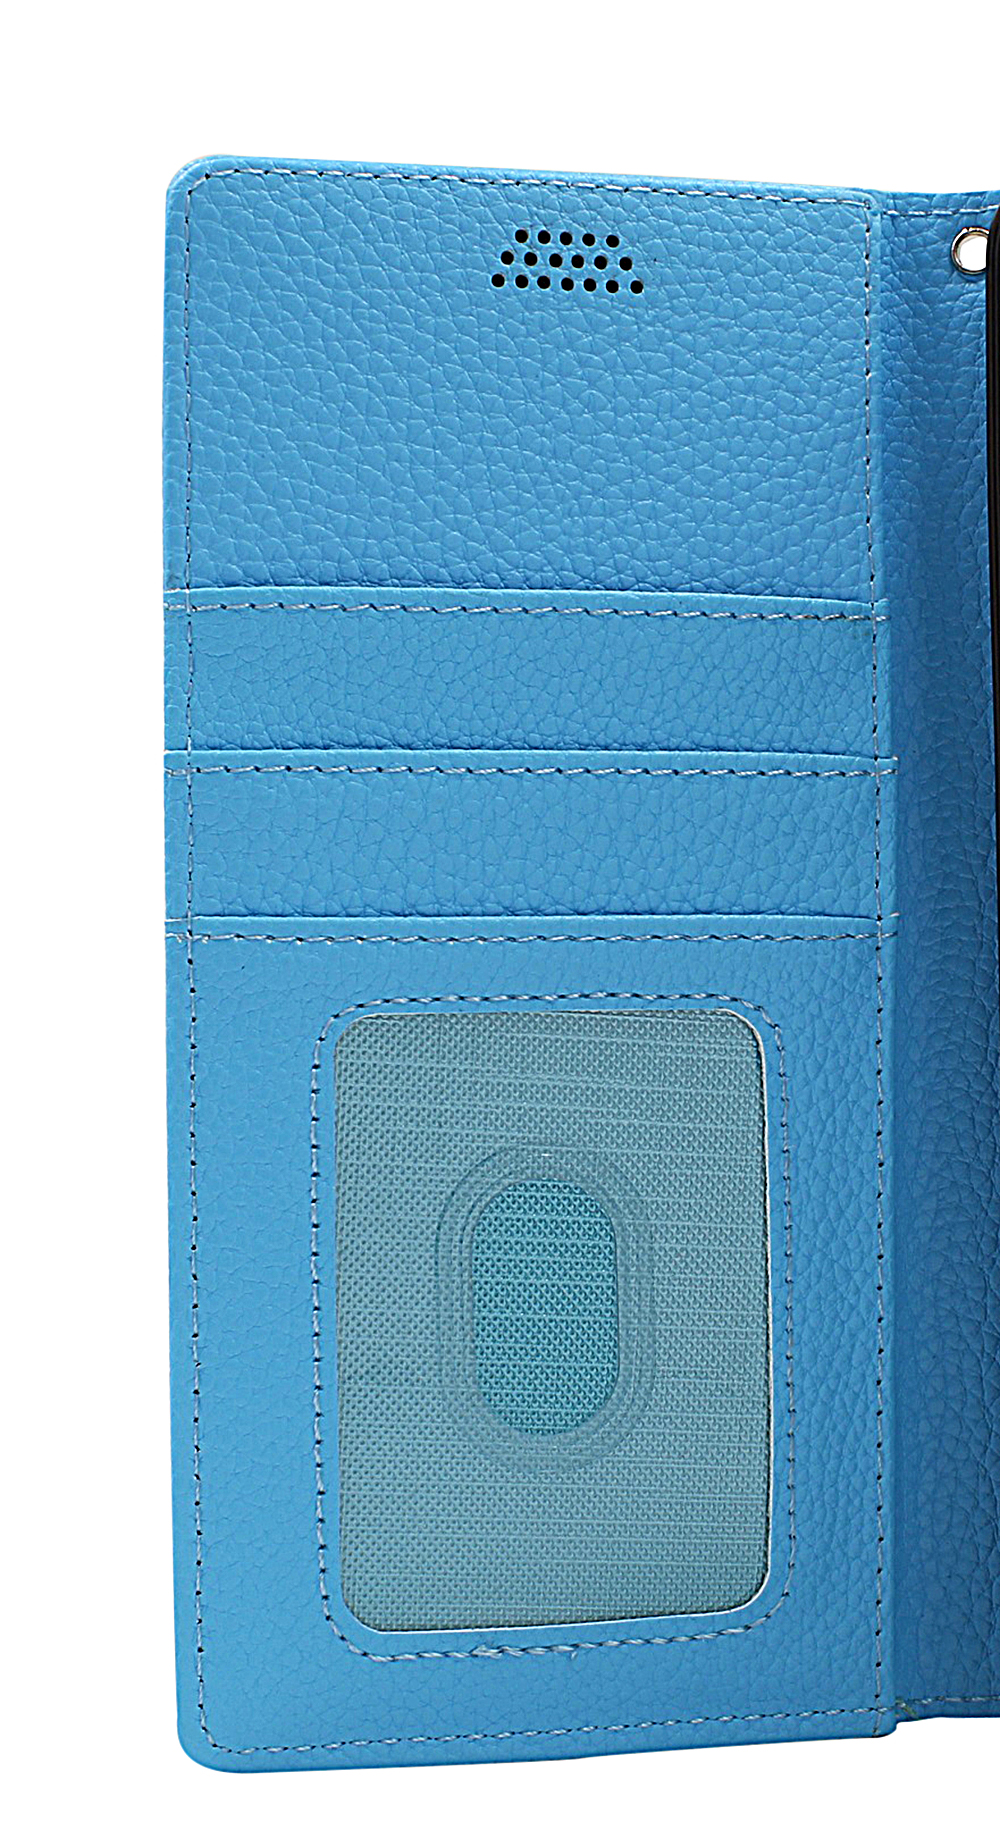 New Standcase Wallet Motorola Moto E7 Plus